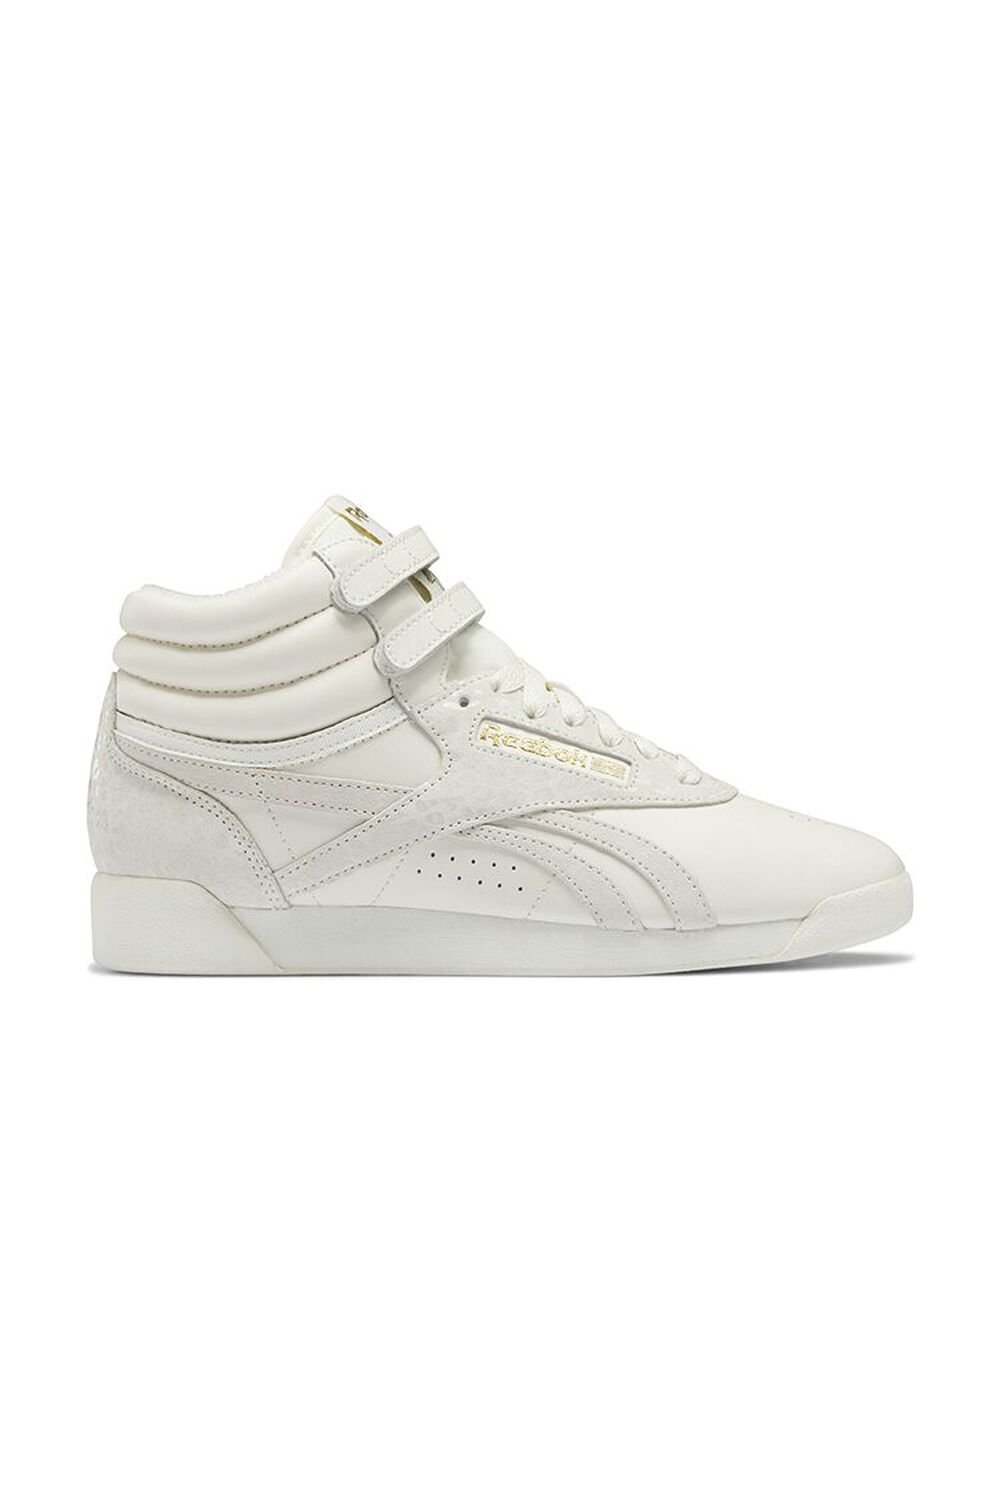 WHITE Reebok FS Hi Sneakers, image 2